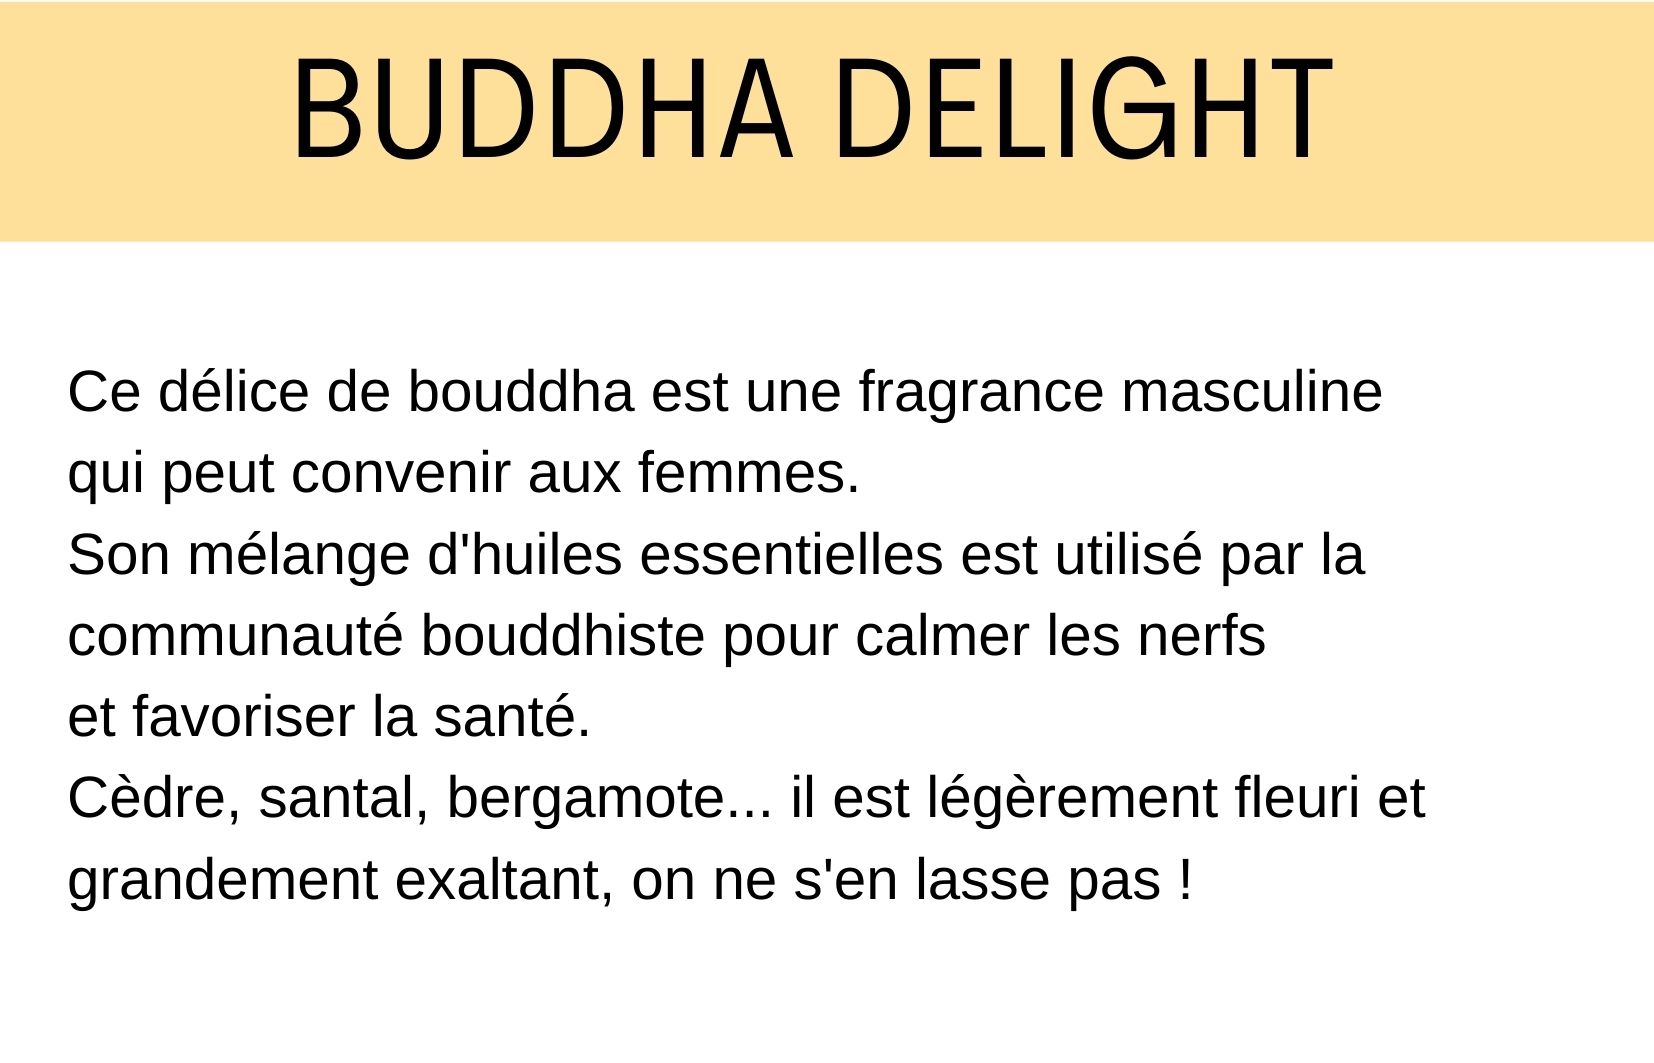 buddha delight fragrance